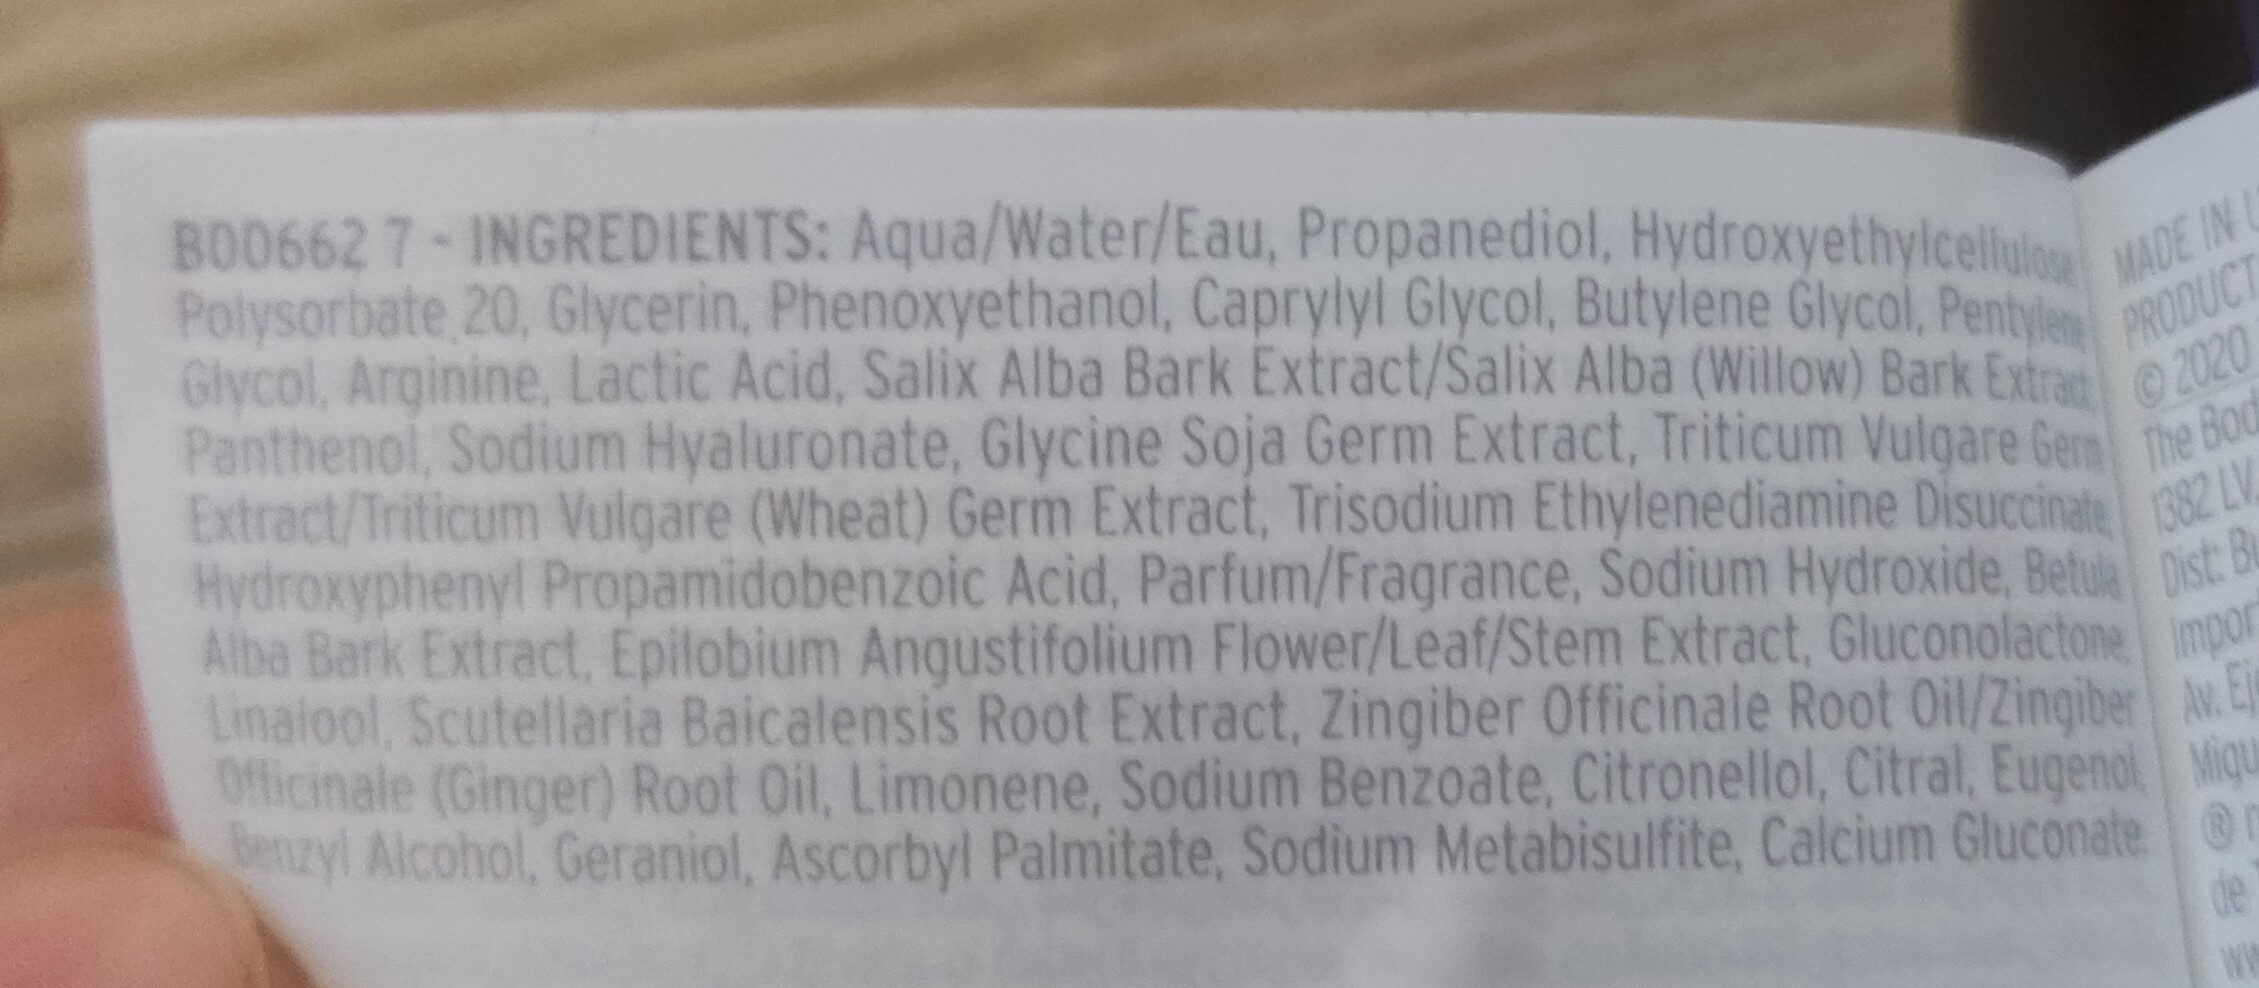 ginger scalp serum - Ingredients - en